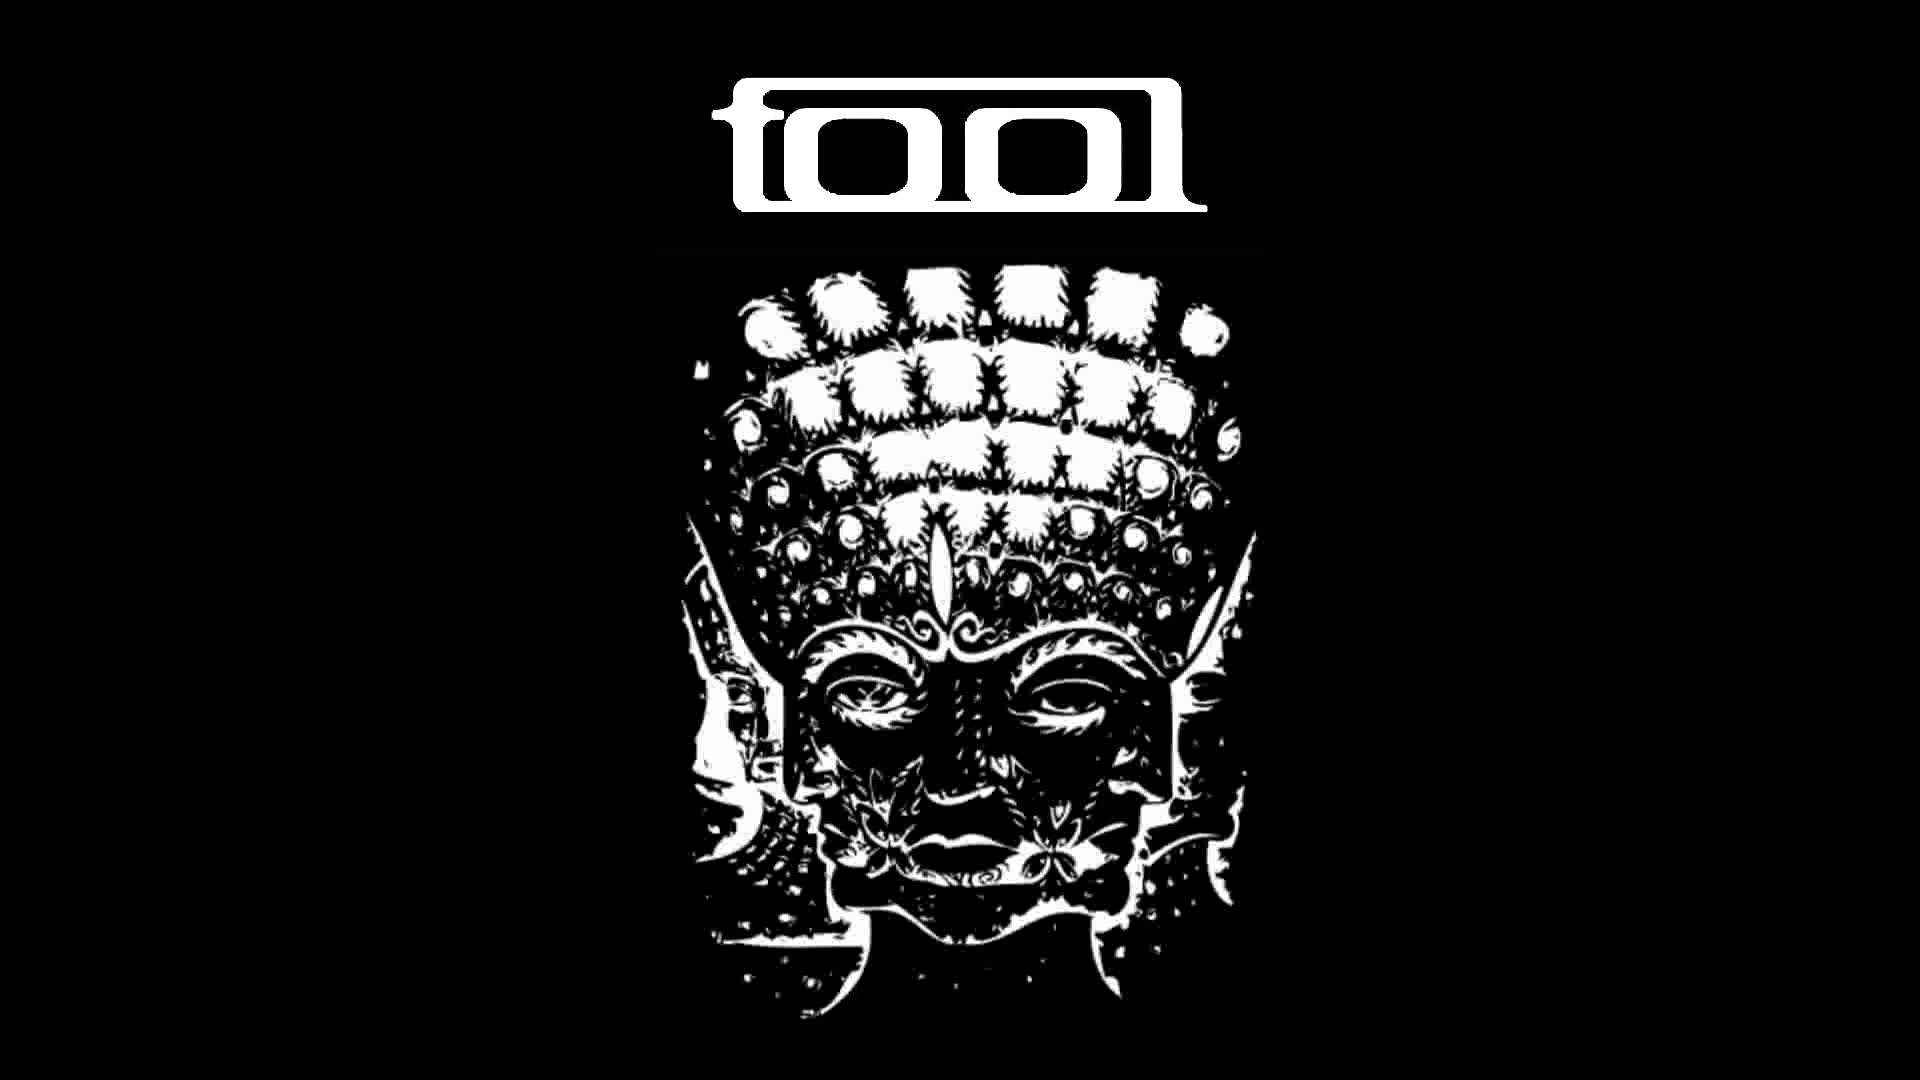 Tool Band Logo Wallpaper